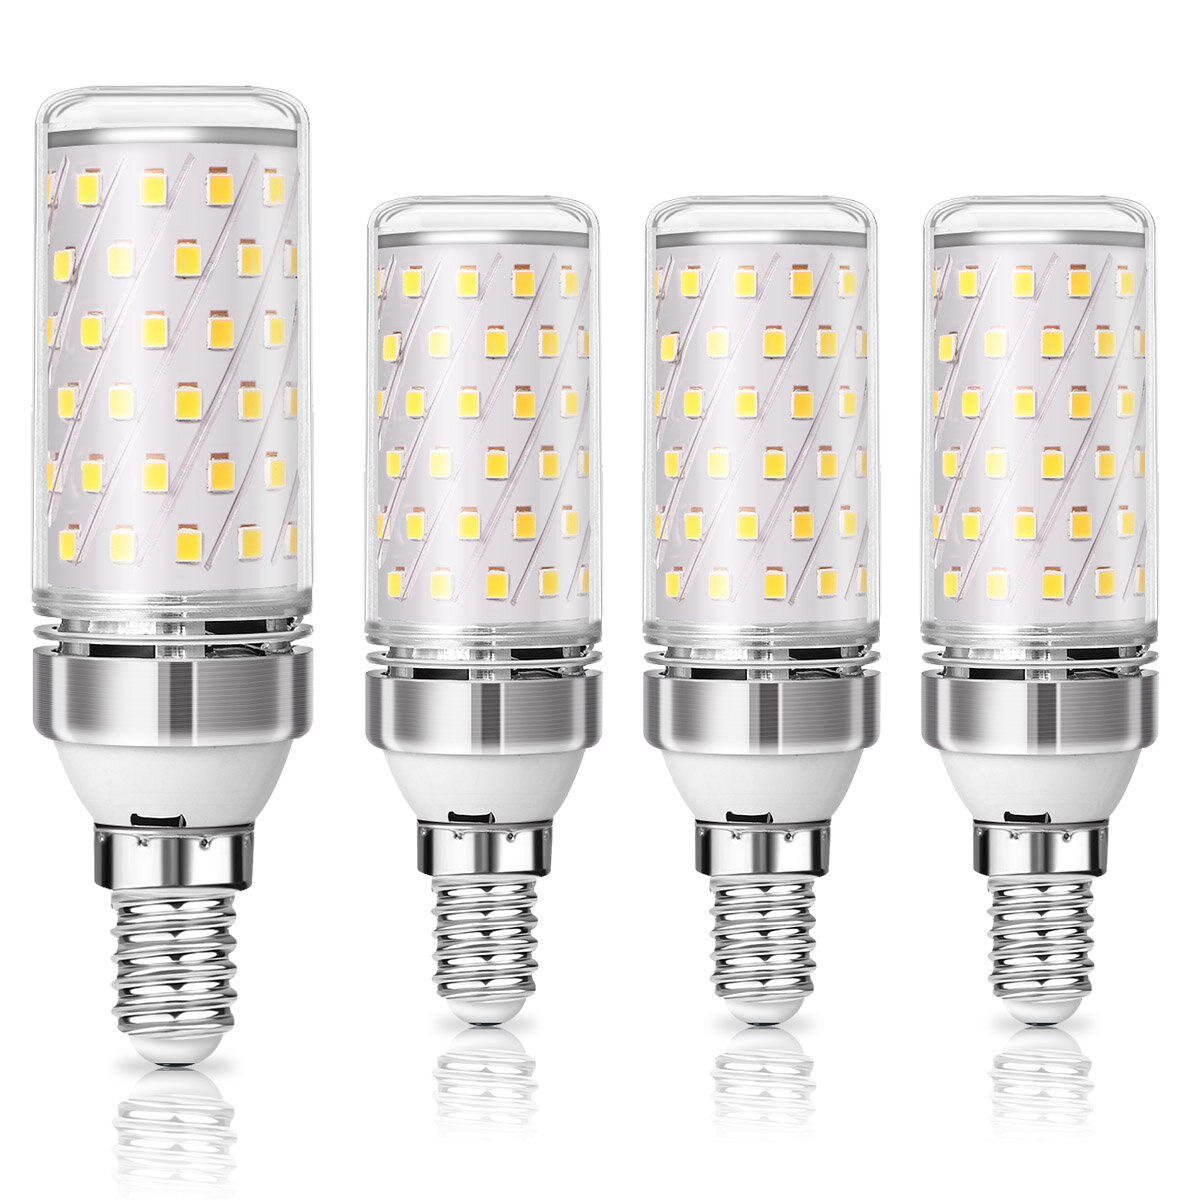 

Kingso 4PCS AC 230V 12W 6000K LED Light Bulbs E14 Socket with 84pcs 2835 Lamp Beads for Living Room Bedroom Kitchen